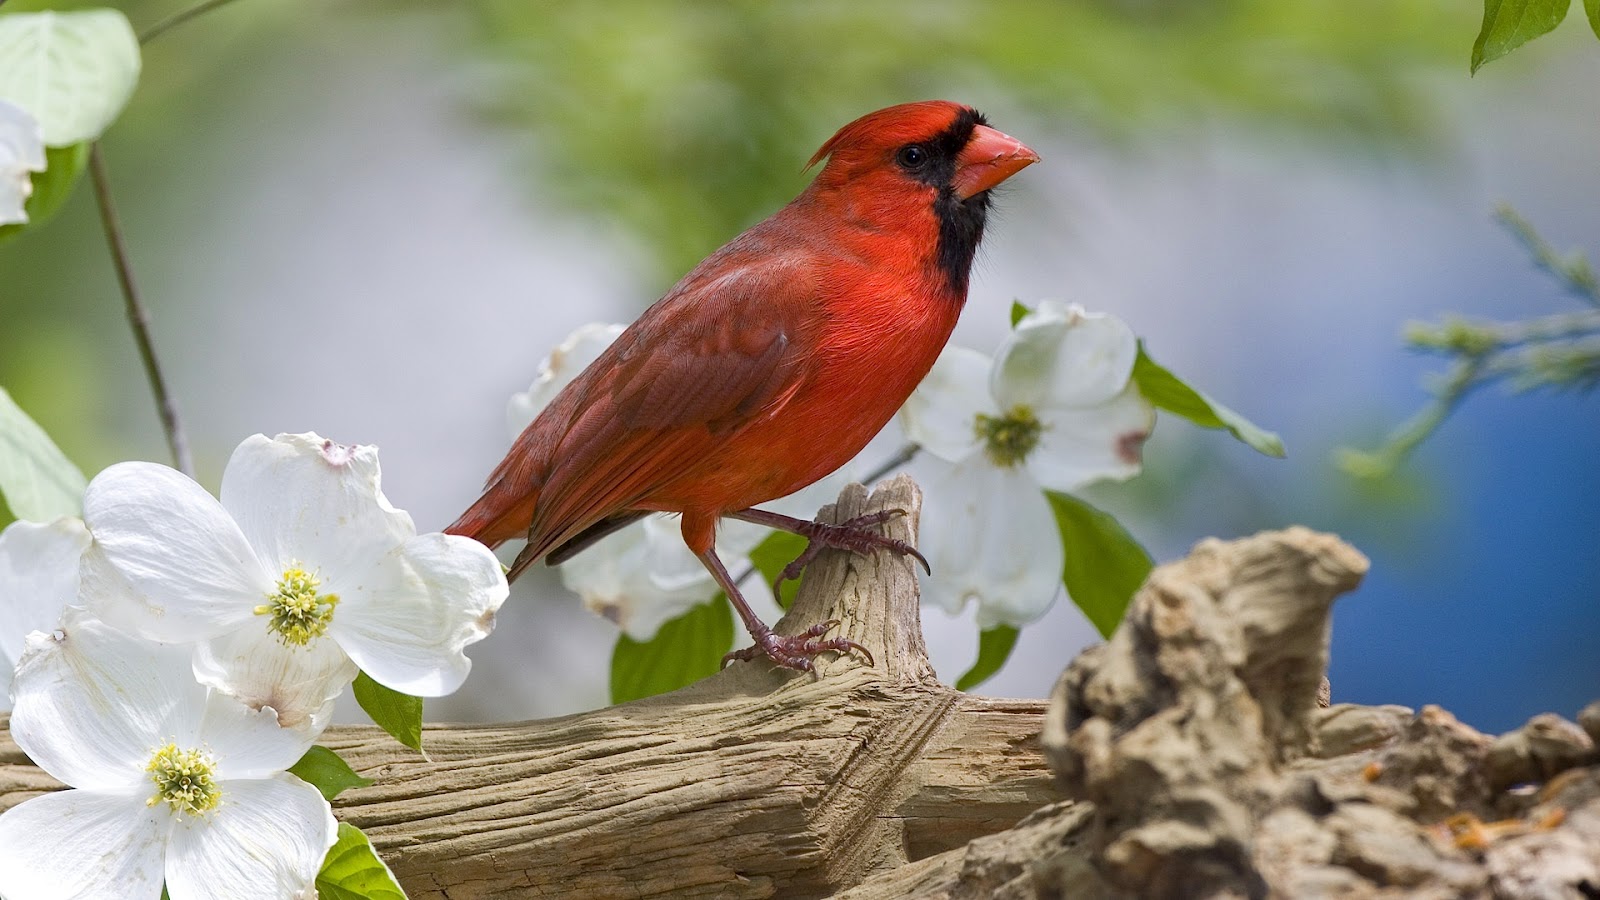 https://blogger.googleusercontent.com/img/b/R29vZ2xl/AVvXsEhGLGxG4Qx8RFx8U9Kb1nEaCZaubqNYNpX1s3mGg2Z9qk7KPcmkUD3ZoBdmni4KbIQkJzzi9W72zcwgeXayyqCLnjdCx3HWQsVi5VGPuIsiSTSYpNm5-_NTZOQzQwG7sK6I4ZCfKmejGMqK/s1600/Real_Angry_Birds_Look_Like_Red_Bird_HD_Wallpaper.jpg